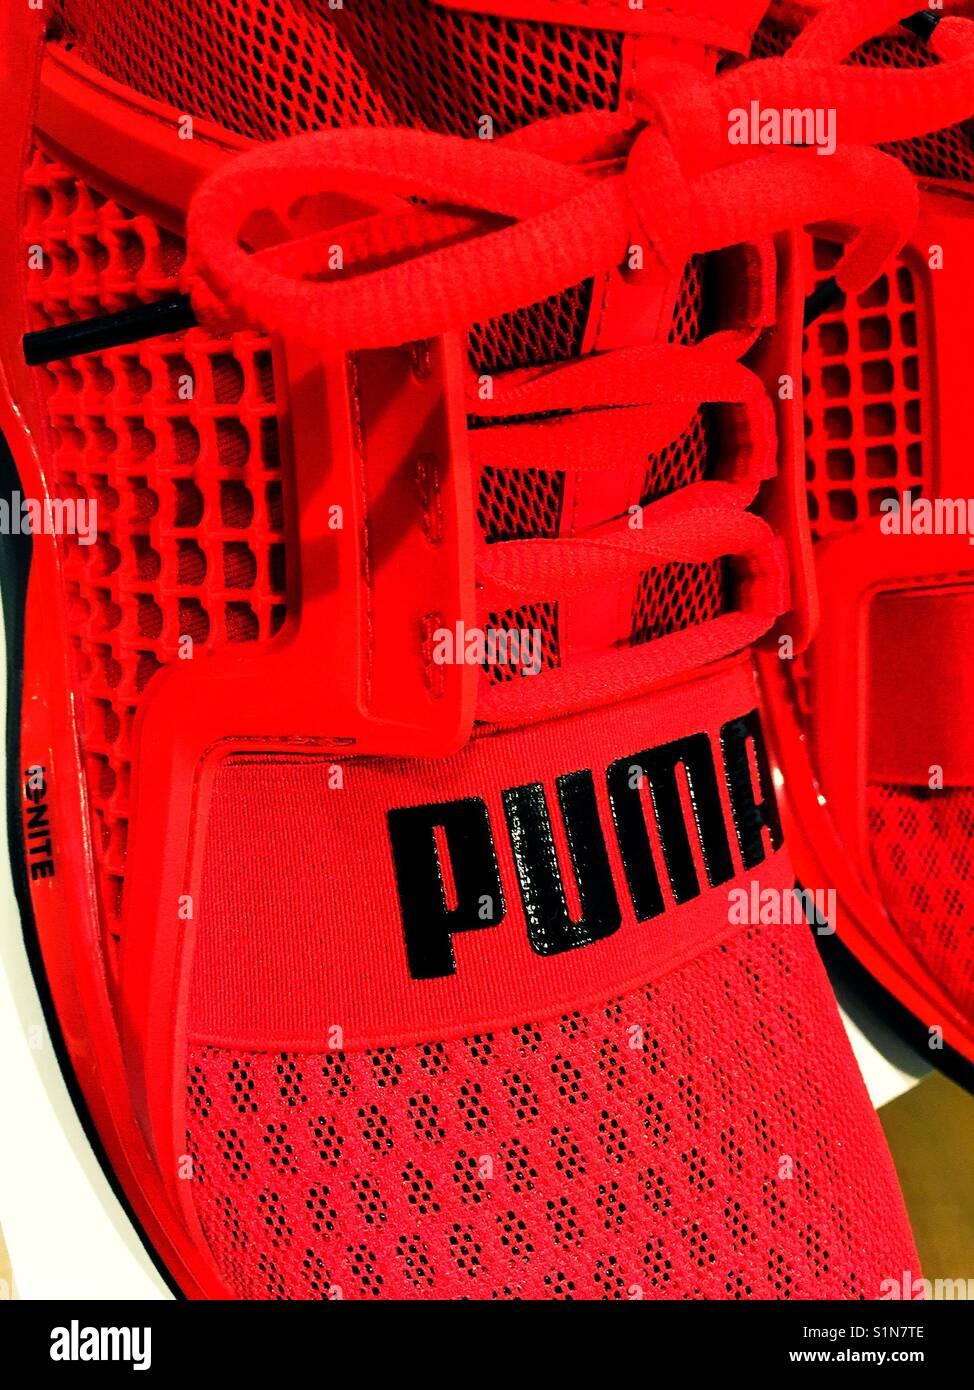 Leuchtend rote Marke Puma Athletic Shoe, USA Stockfoto